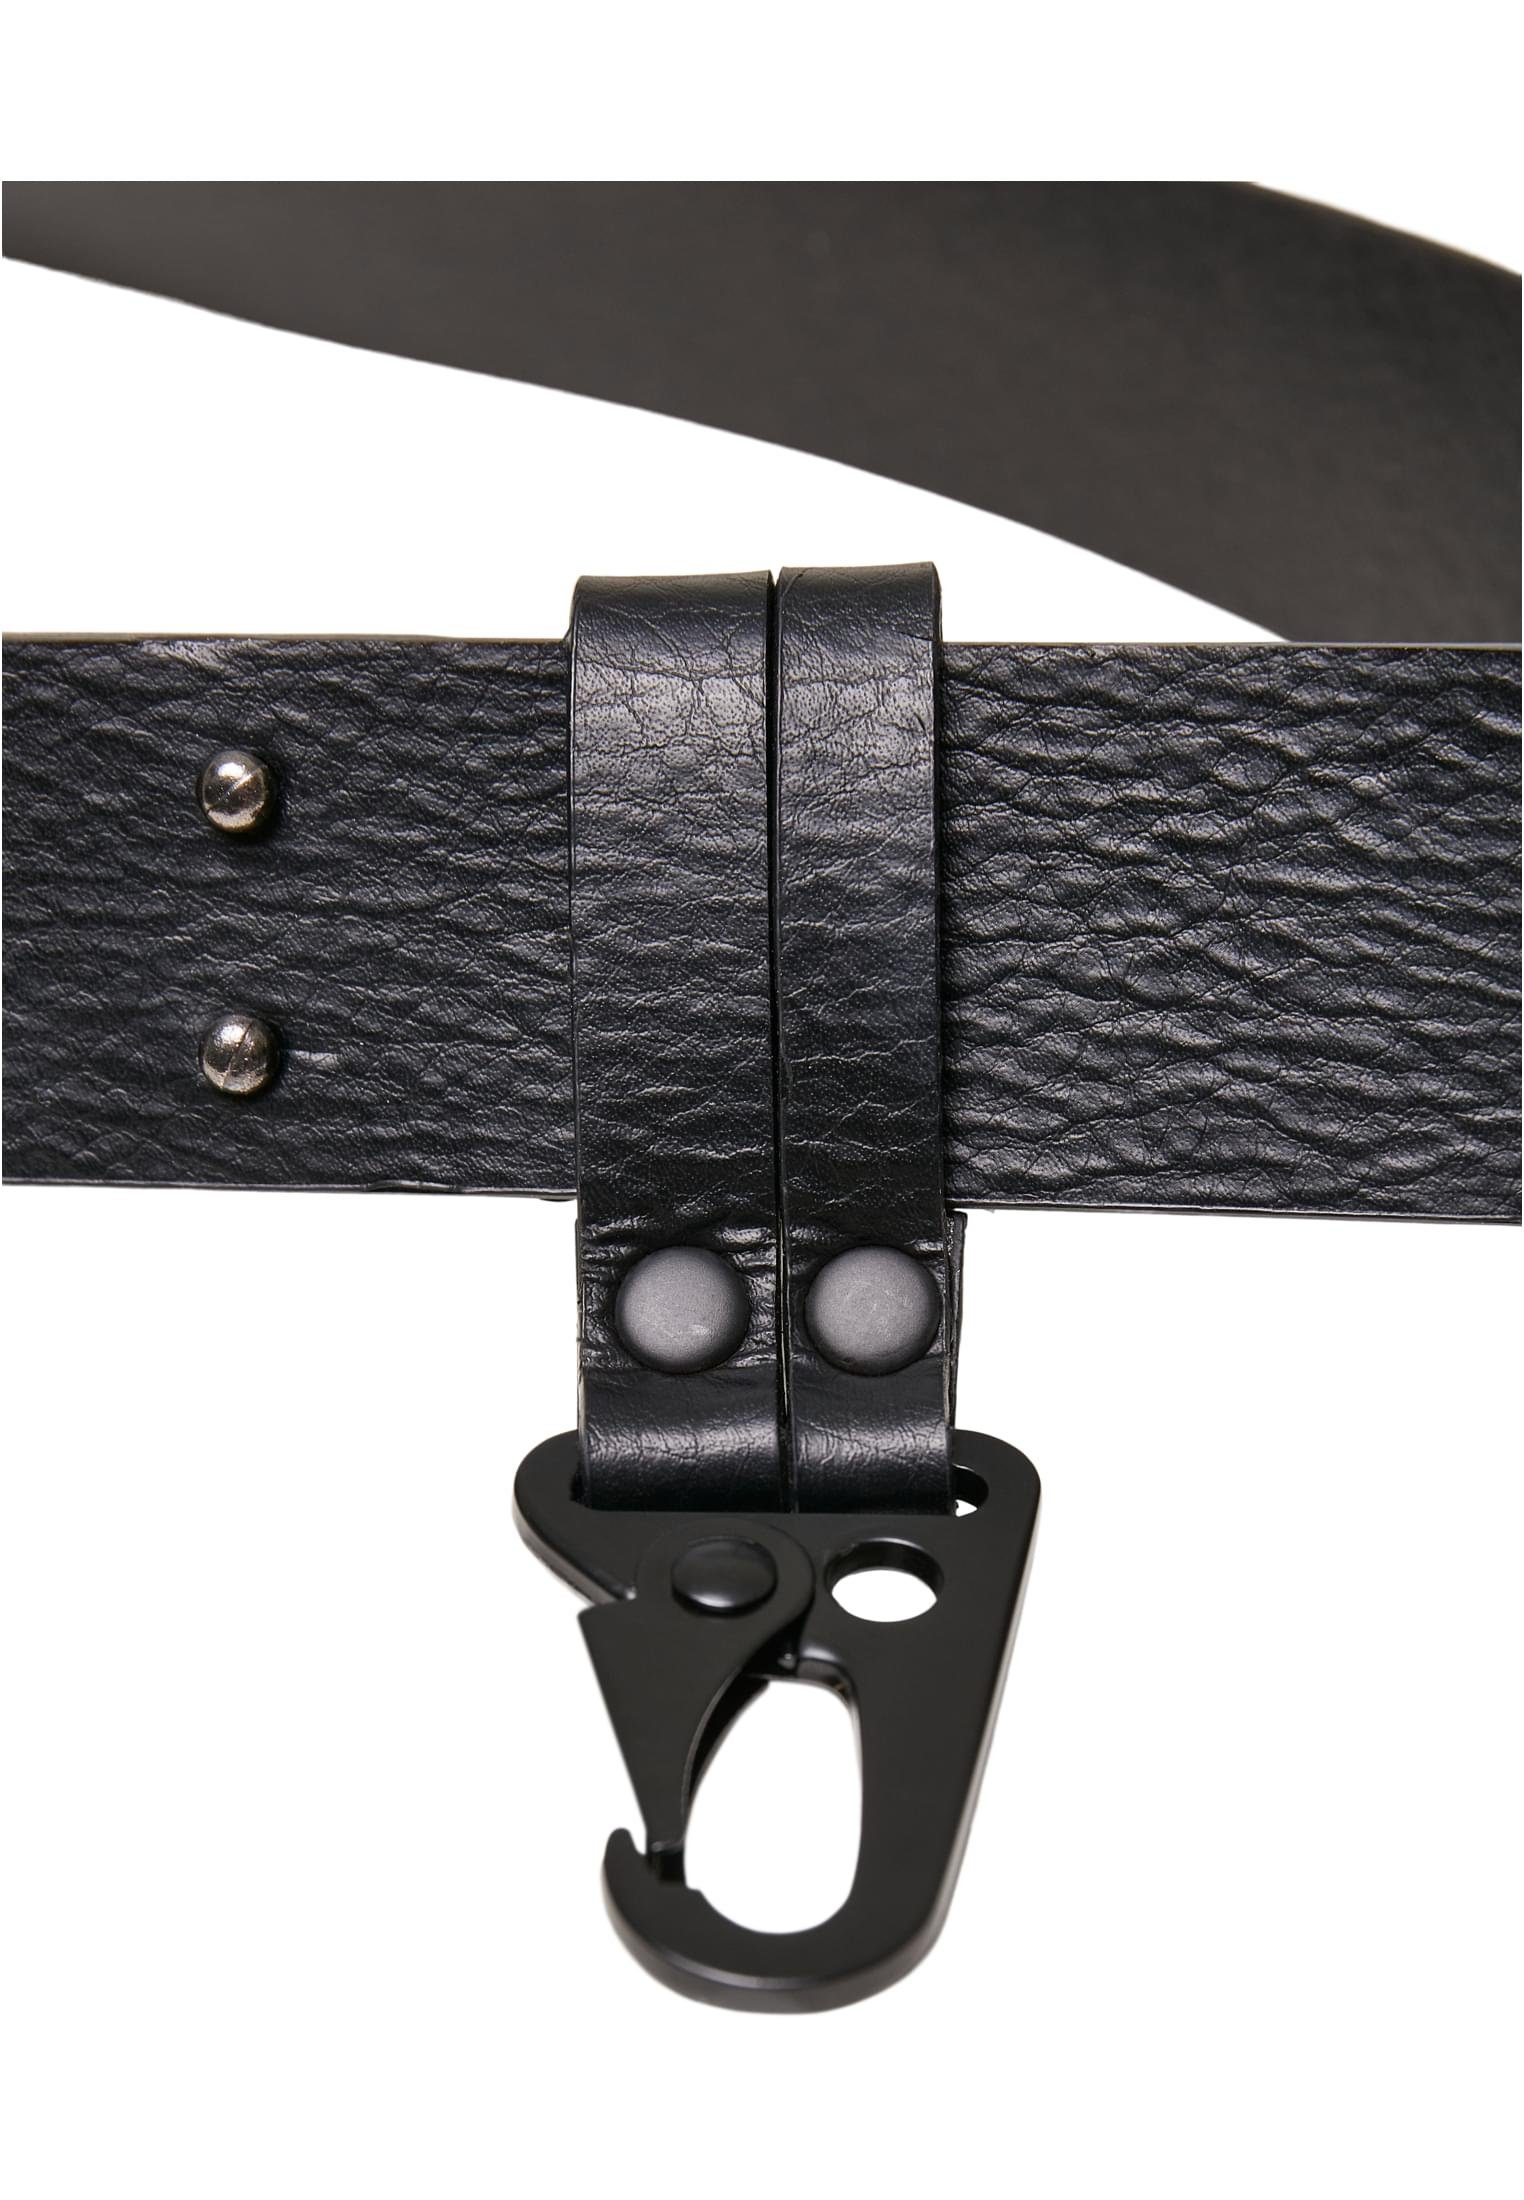 Hook With URBAN Hüftgürtel Imitation Belt CLASSICS Accessories Leather